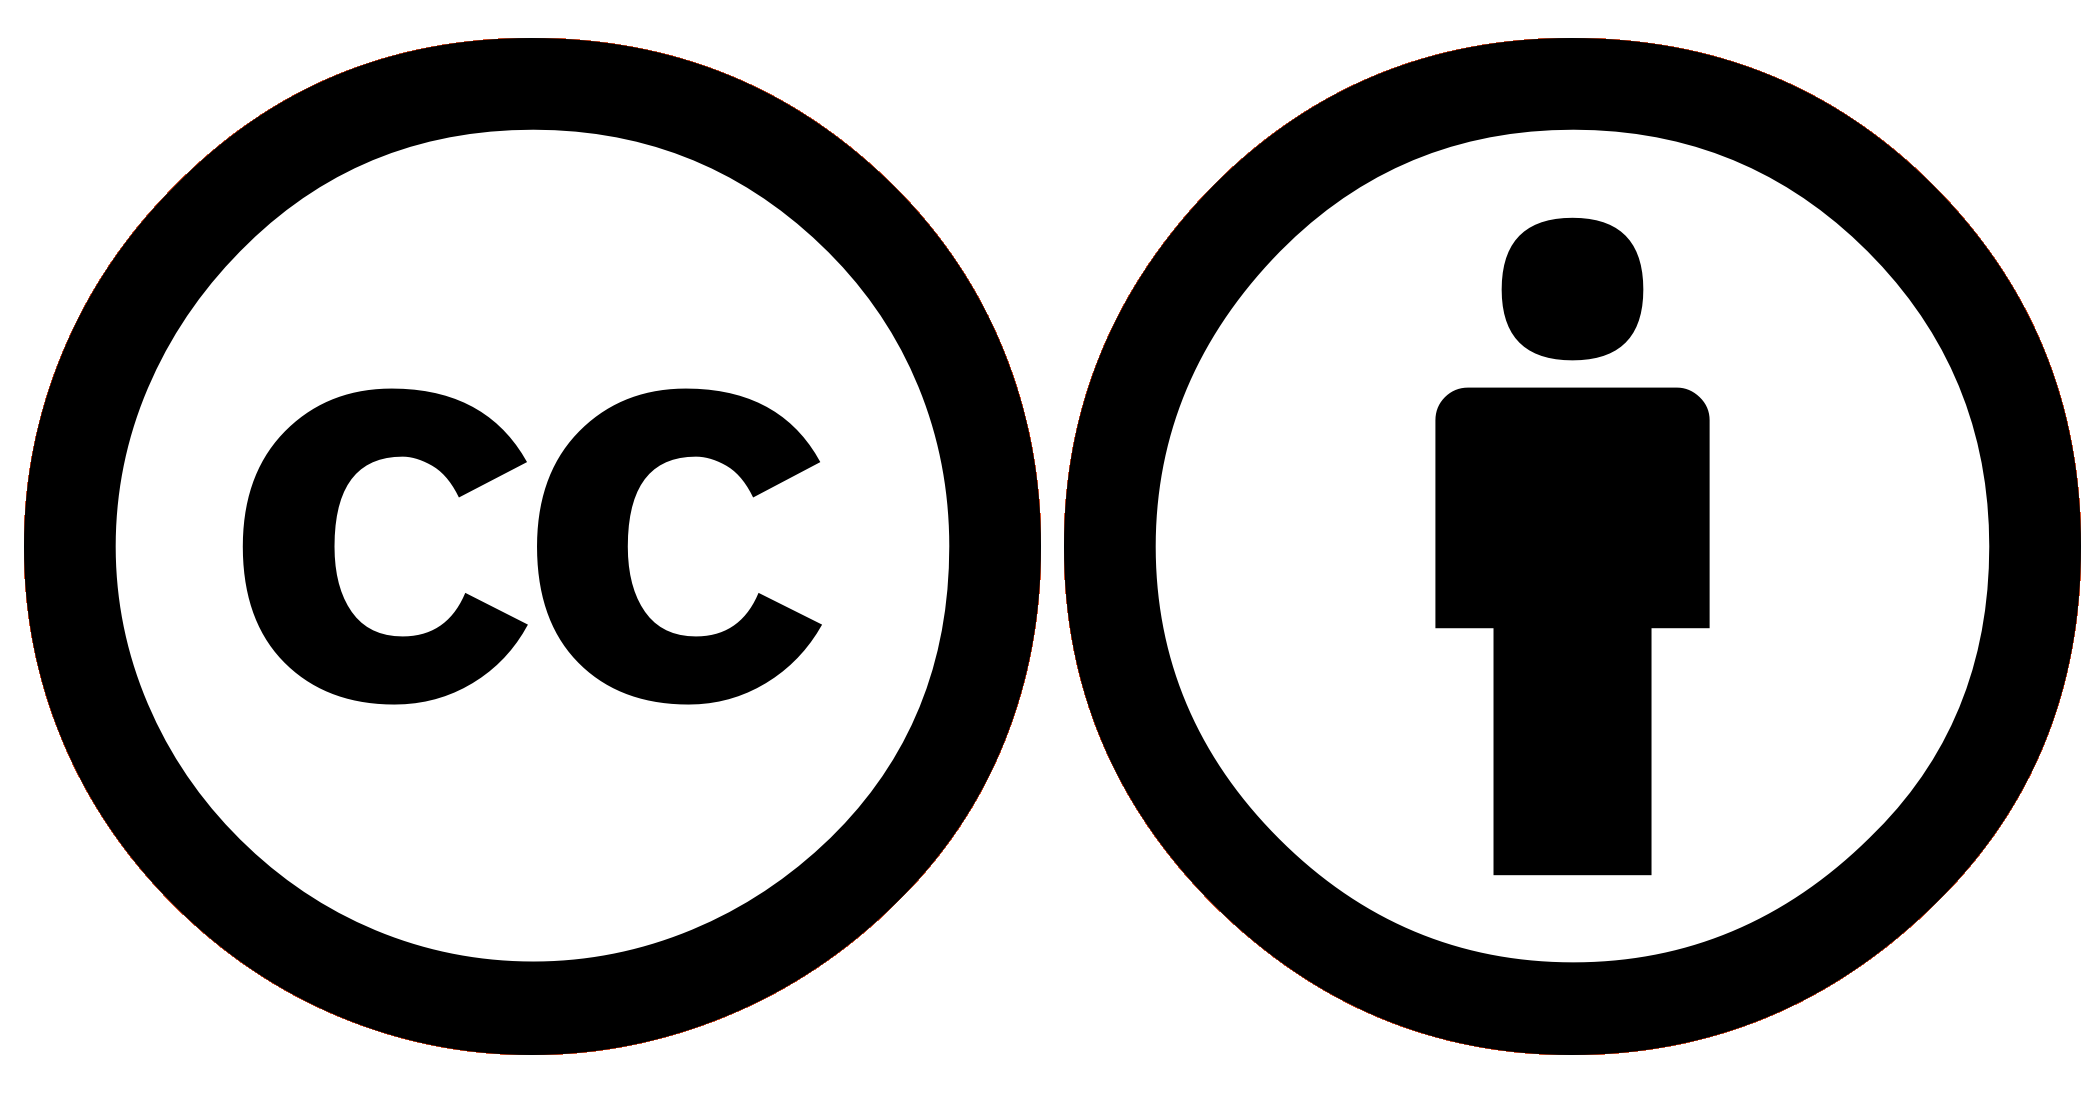 Attribution license. Creative Commons значки. Creative Commons Attribution 4.0. (Cc by 4.0). Creative Commons Attribution.